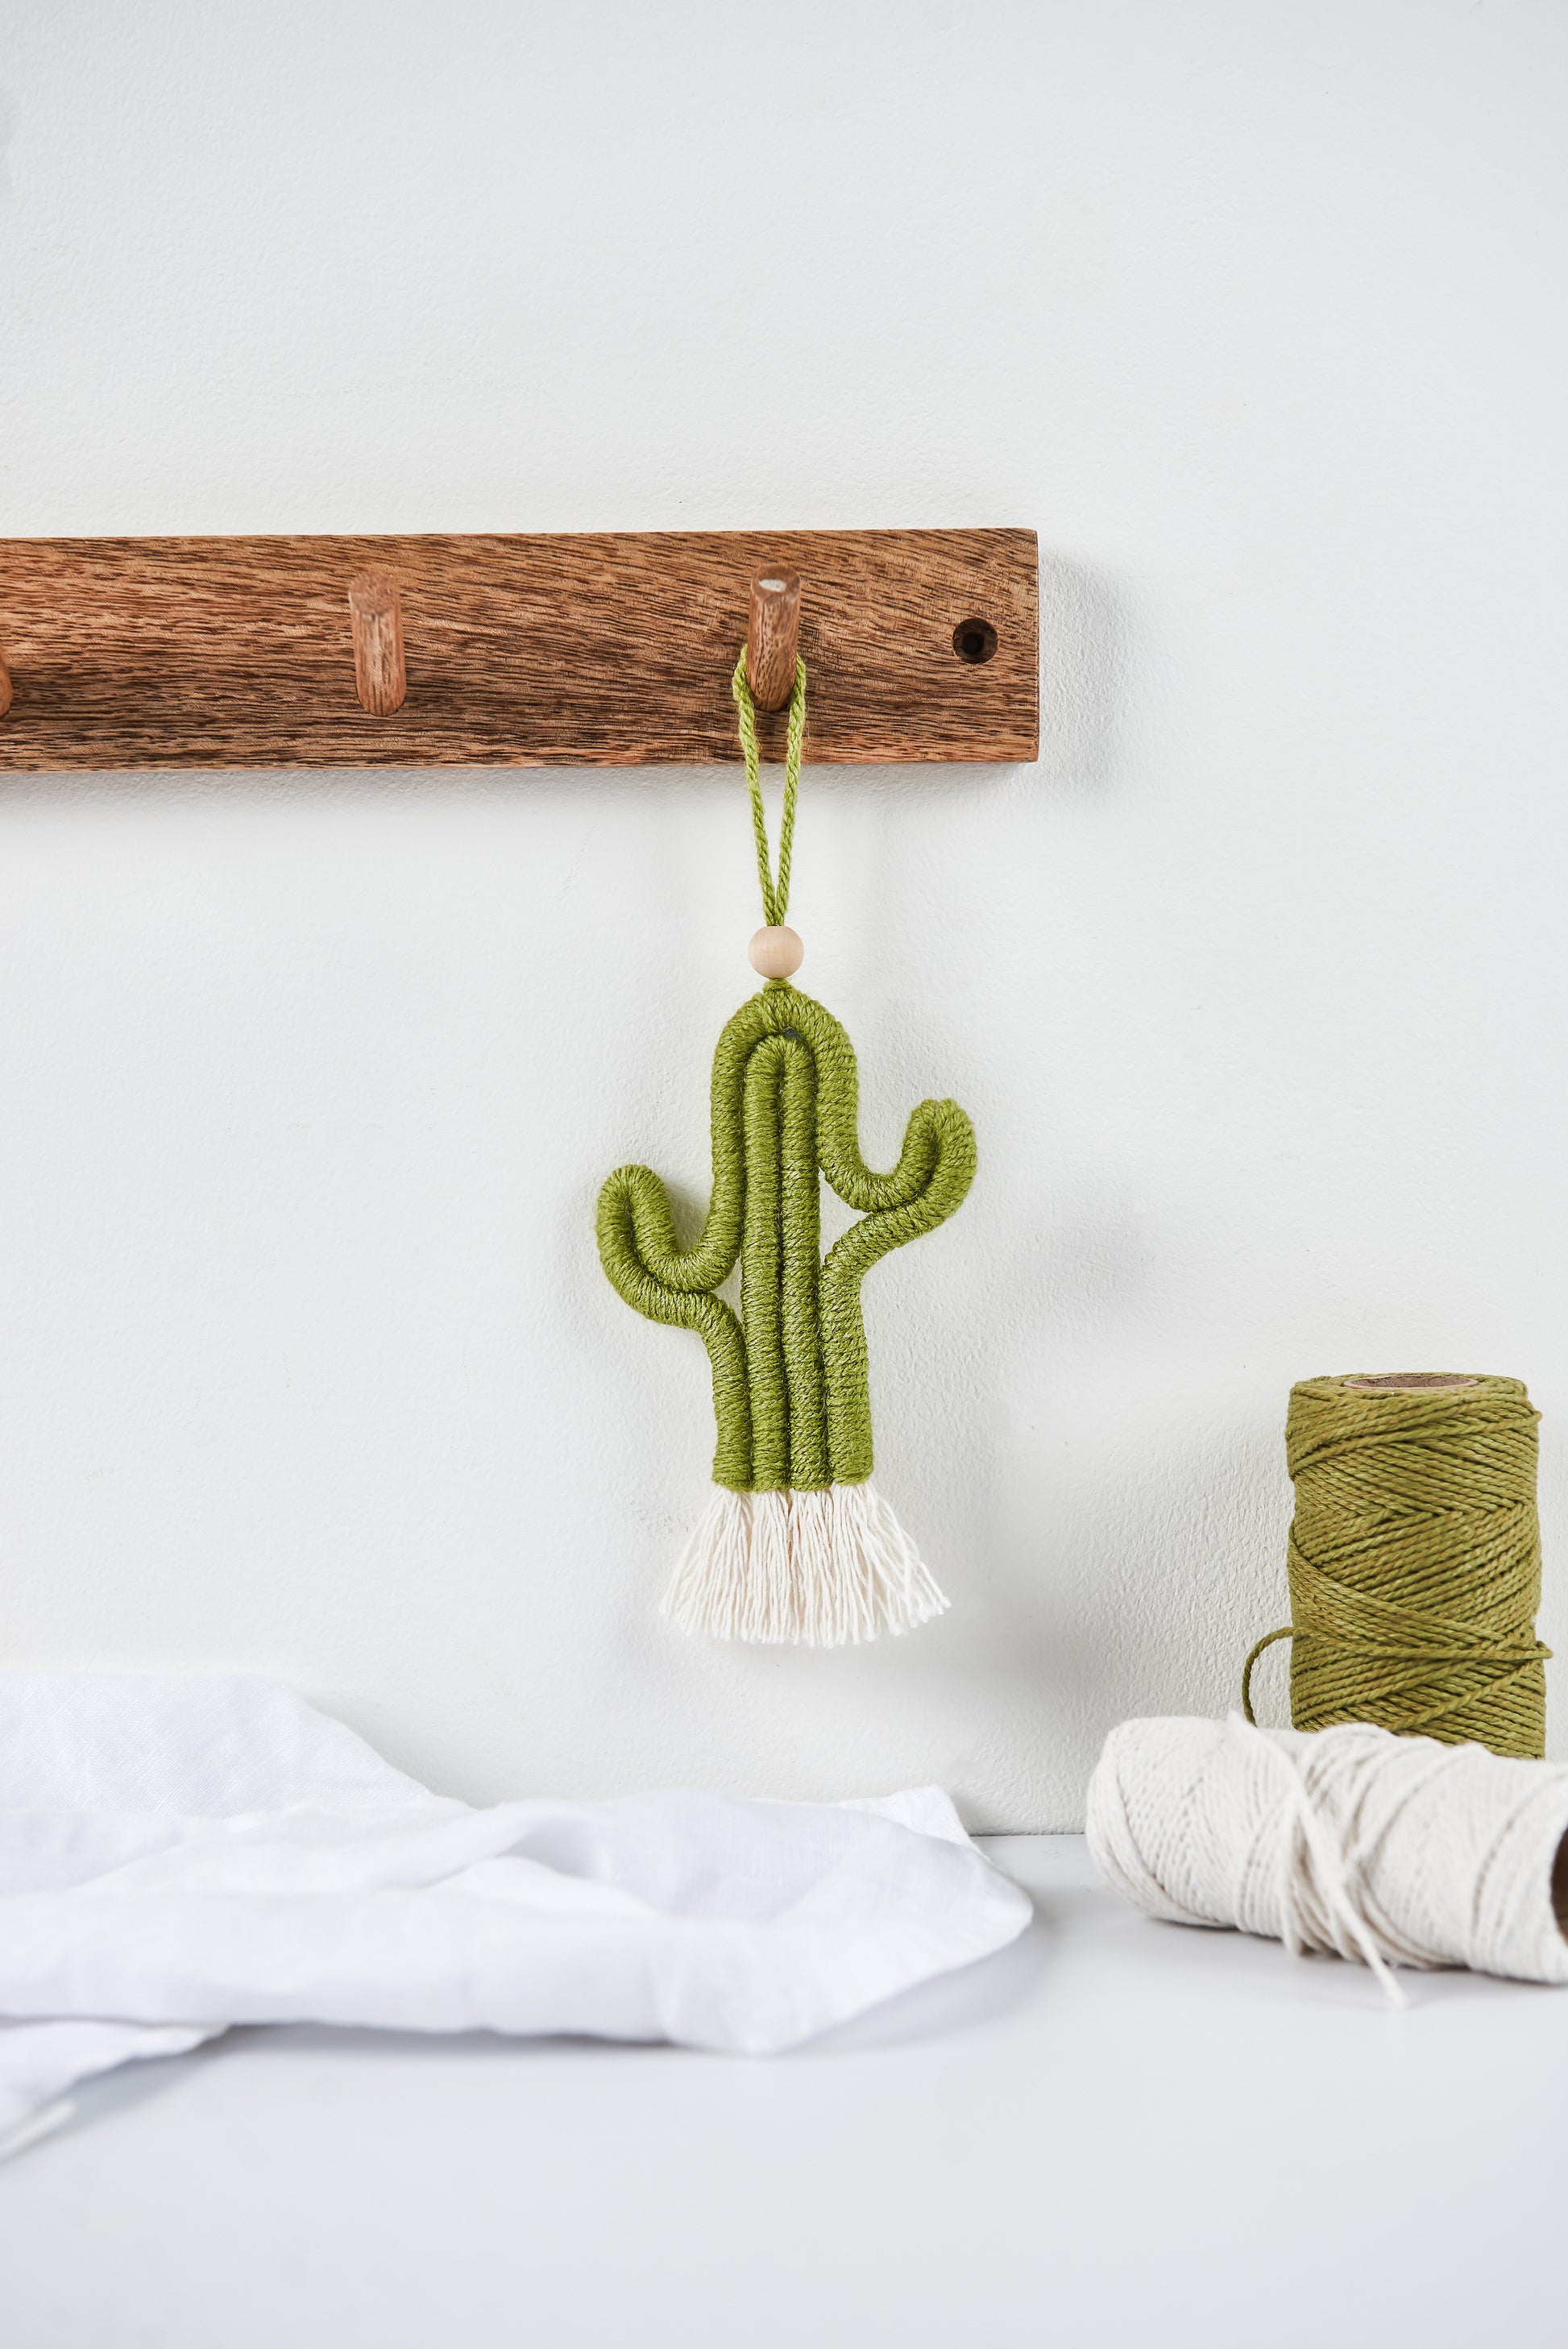 Make Your Own Macrame Cactus Craft Kit – MTH Craft Studio